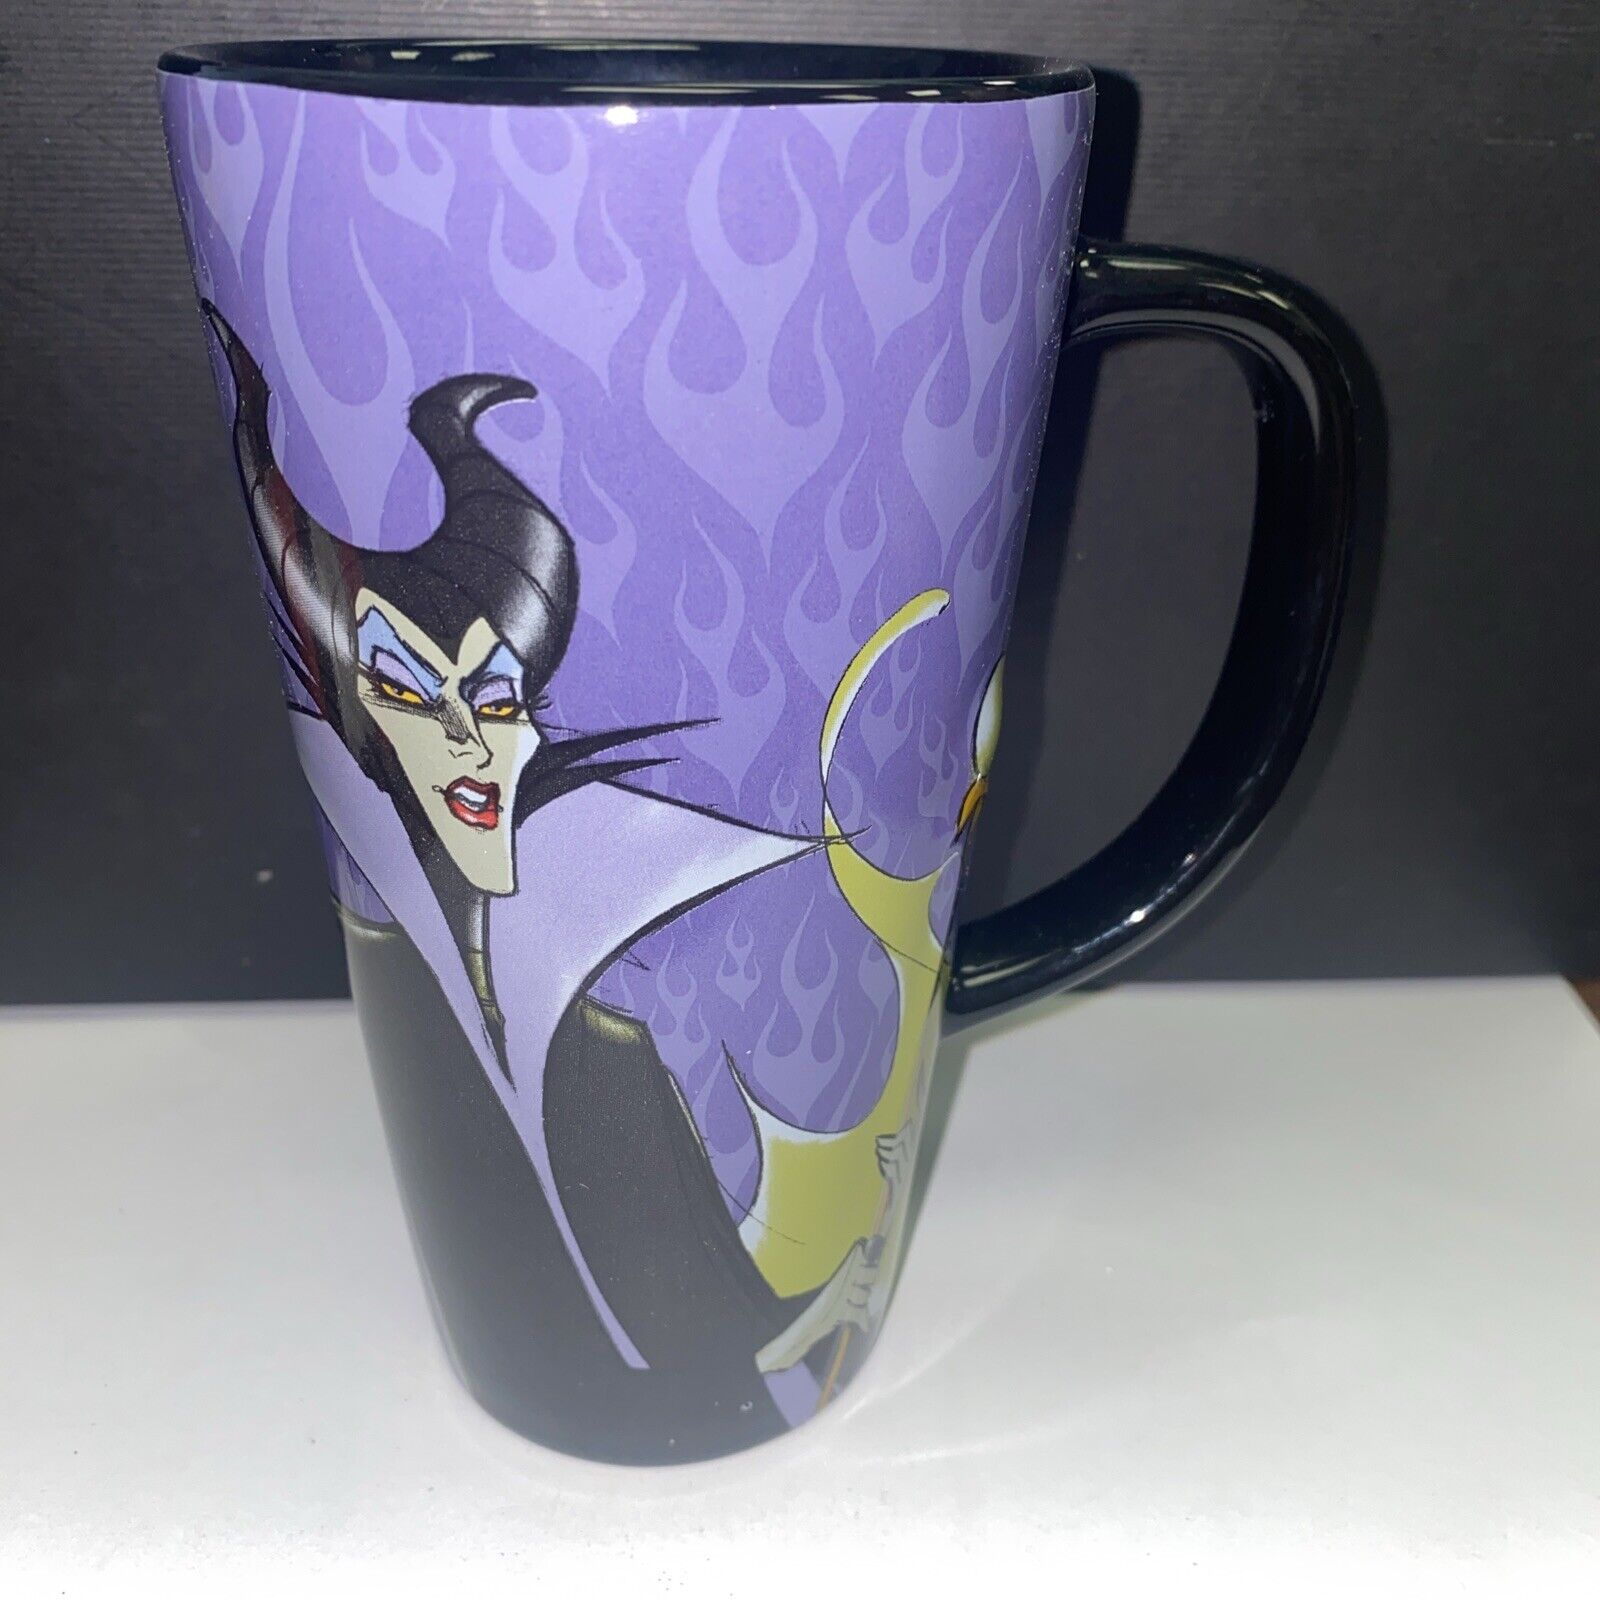 Magnificent Maleficent Disney Mug Latte Coffee Cup new purple black